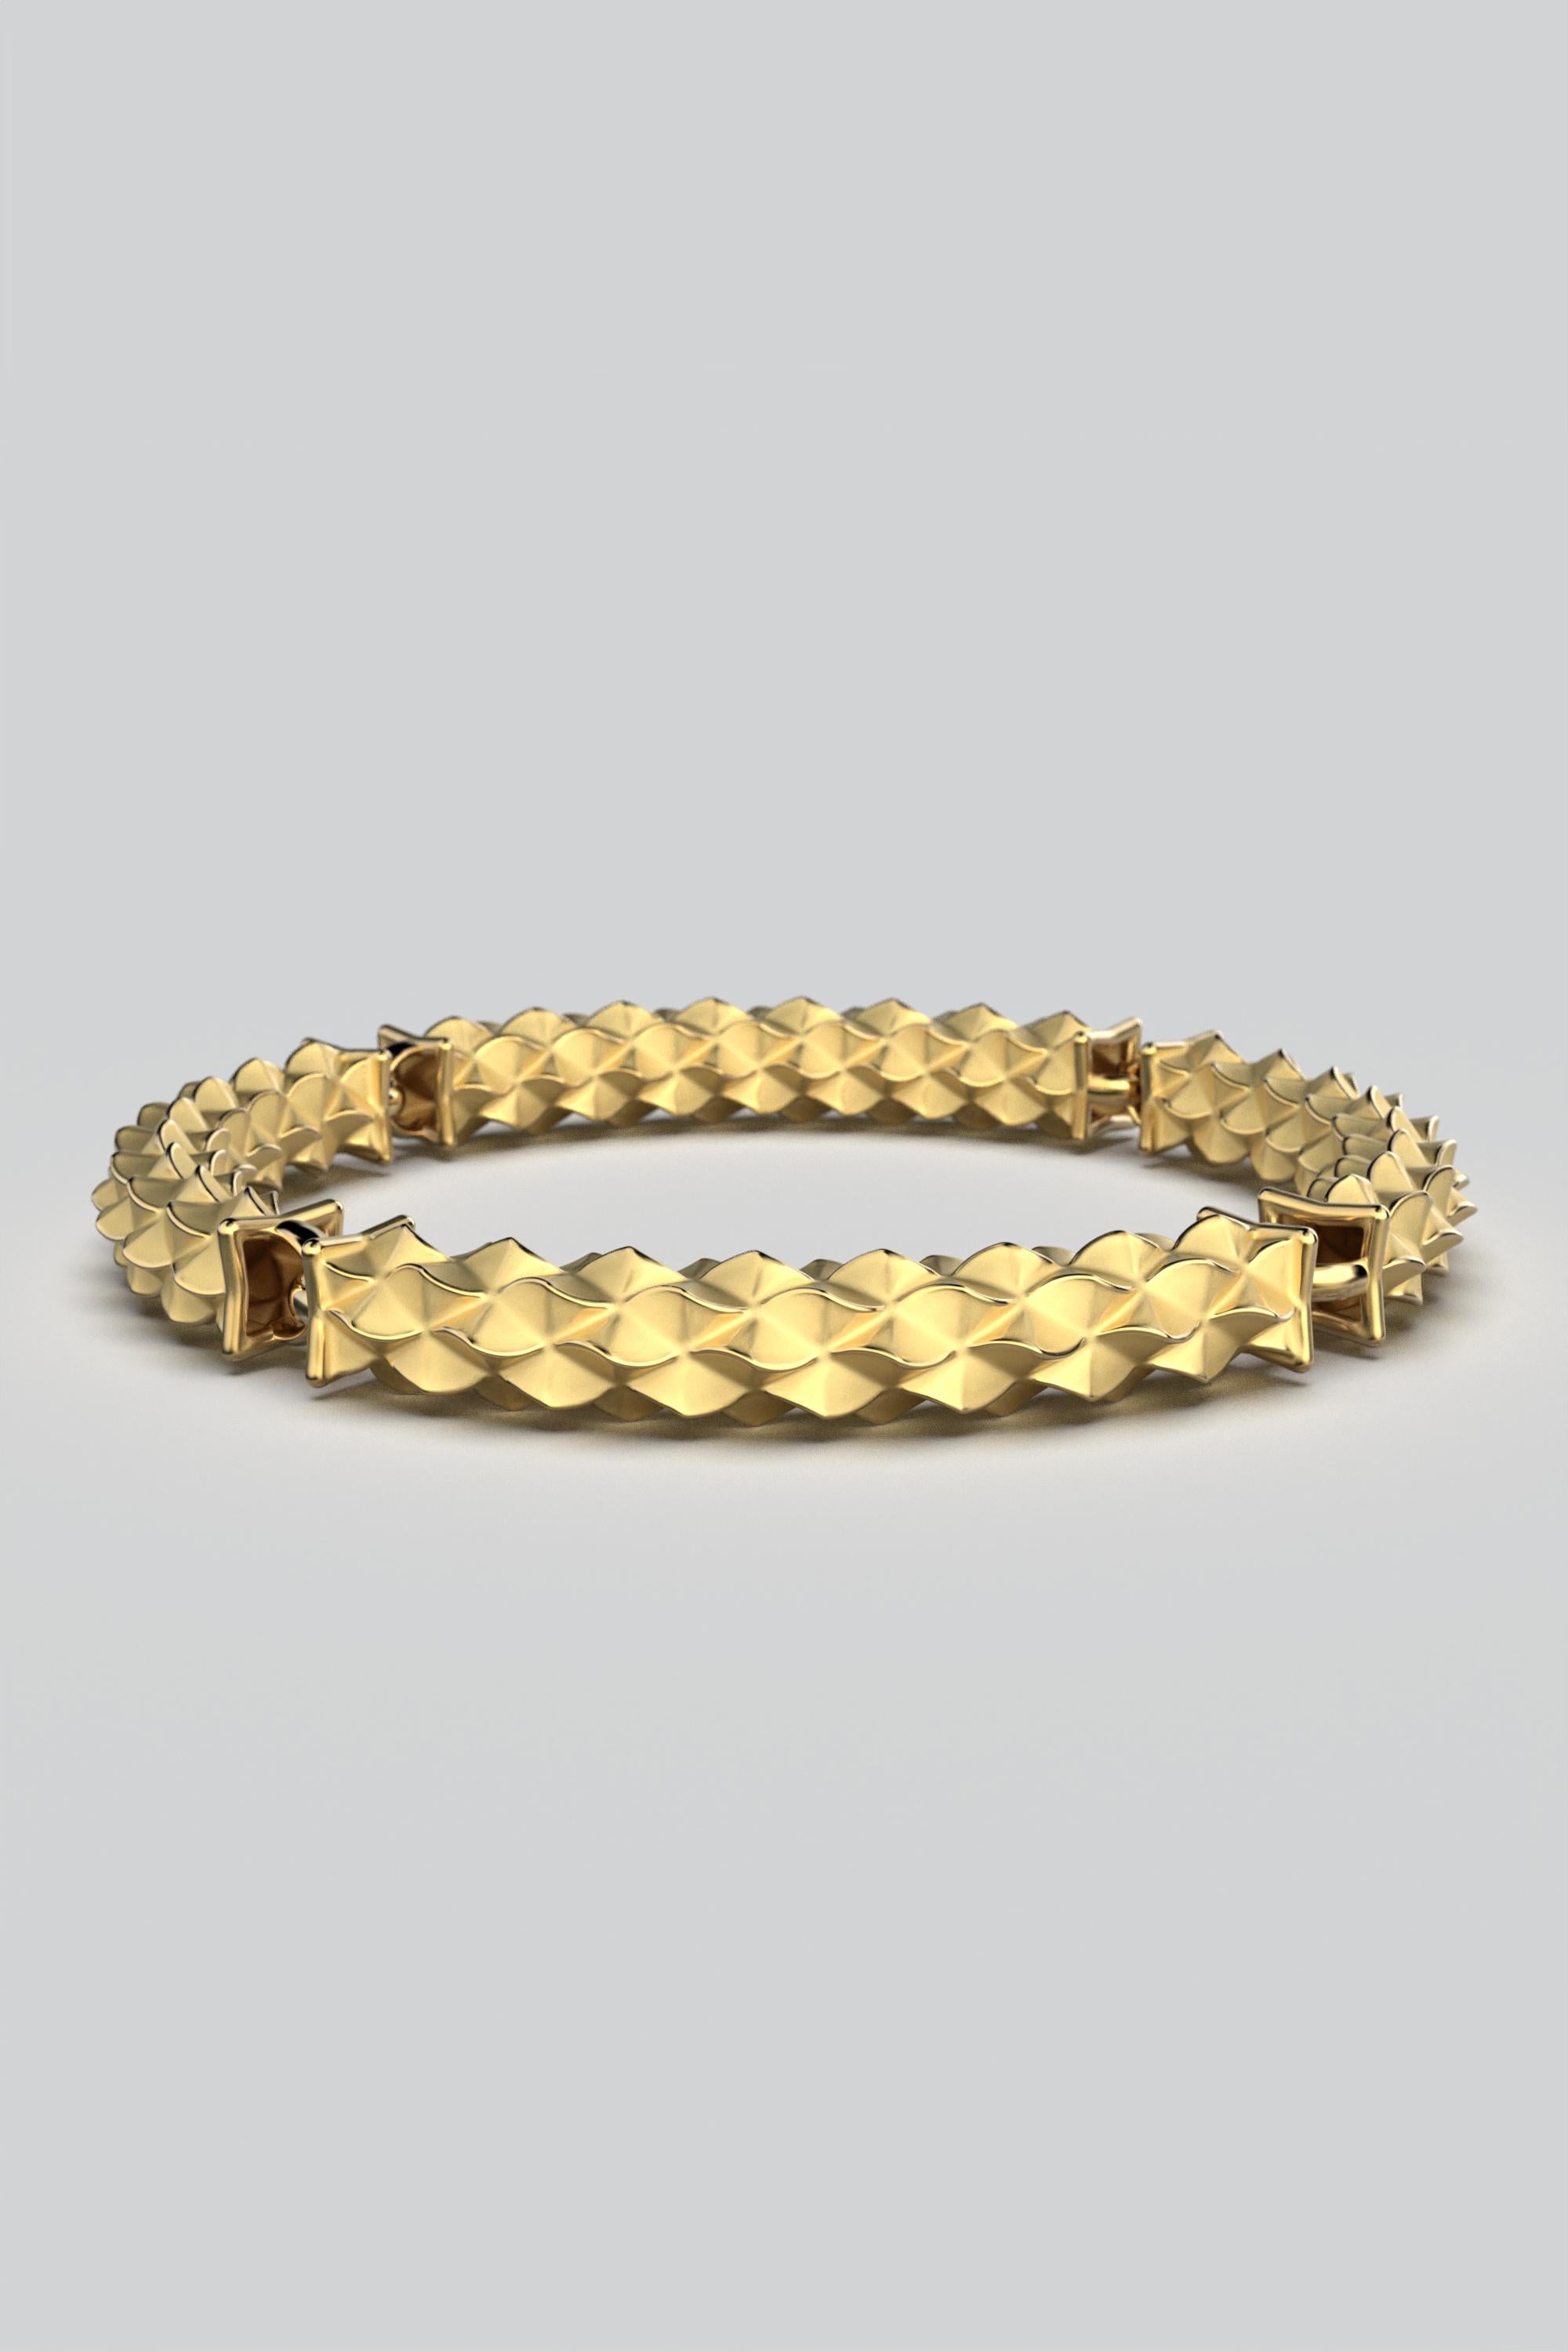 14k Italian Gold Link Bracelet: Custom Semi-Rigid Design by Oltremare Gioielli For Sale 2